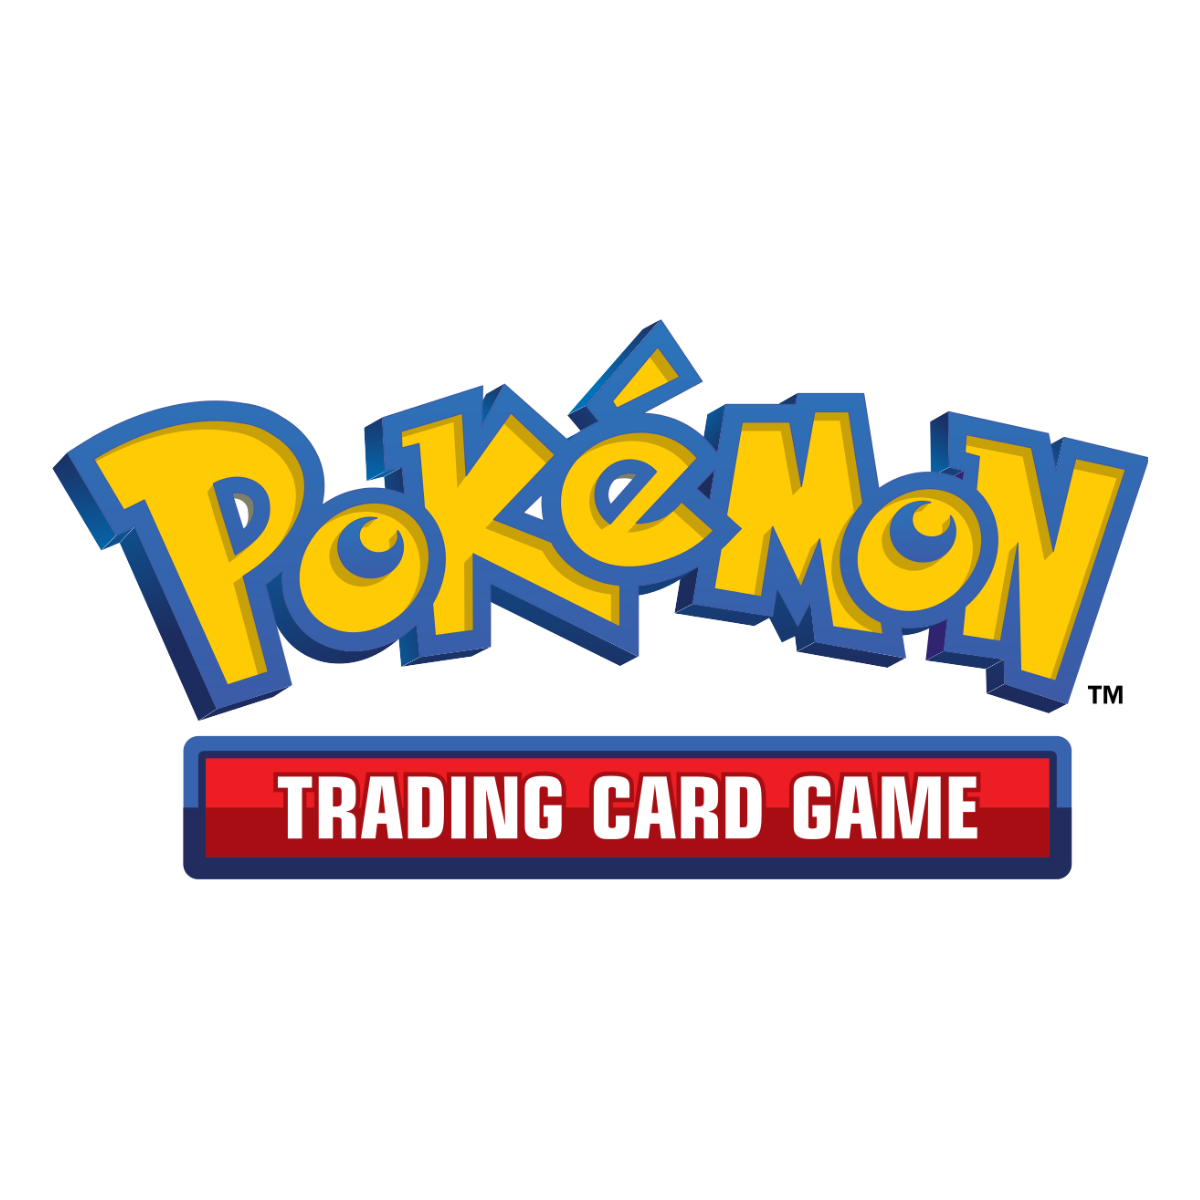 Pokemon TCG: Obsidian Flames SV03 Build & Battle Box-The Pokémon Company International-Ace Cards & Collectibles